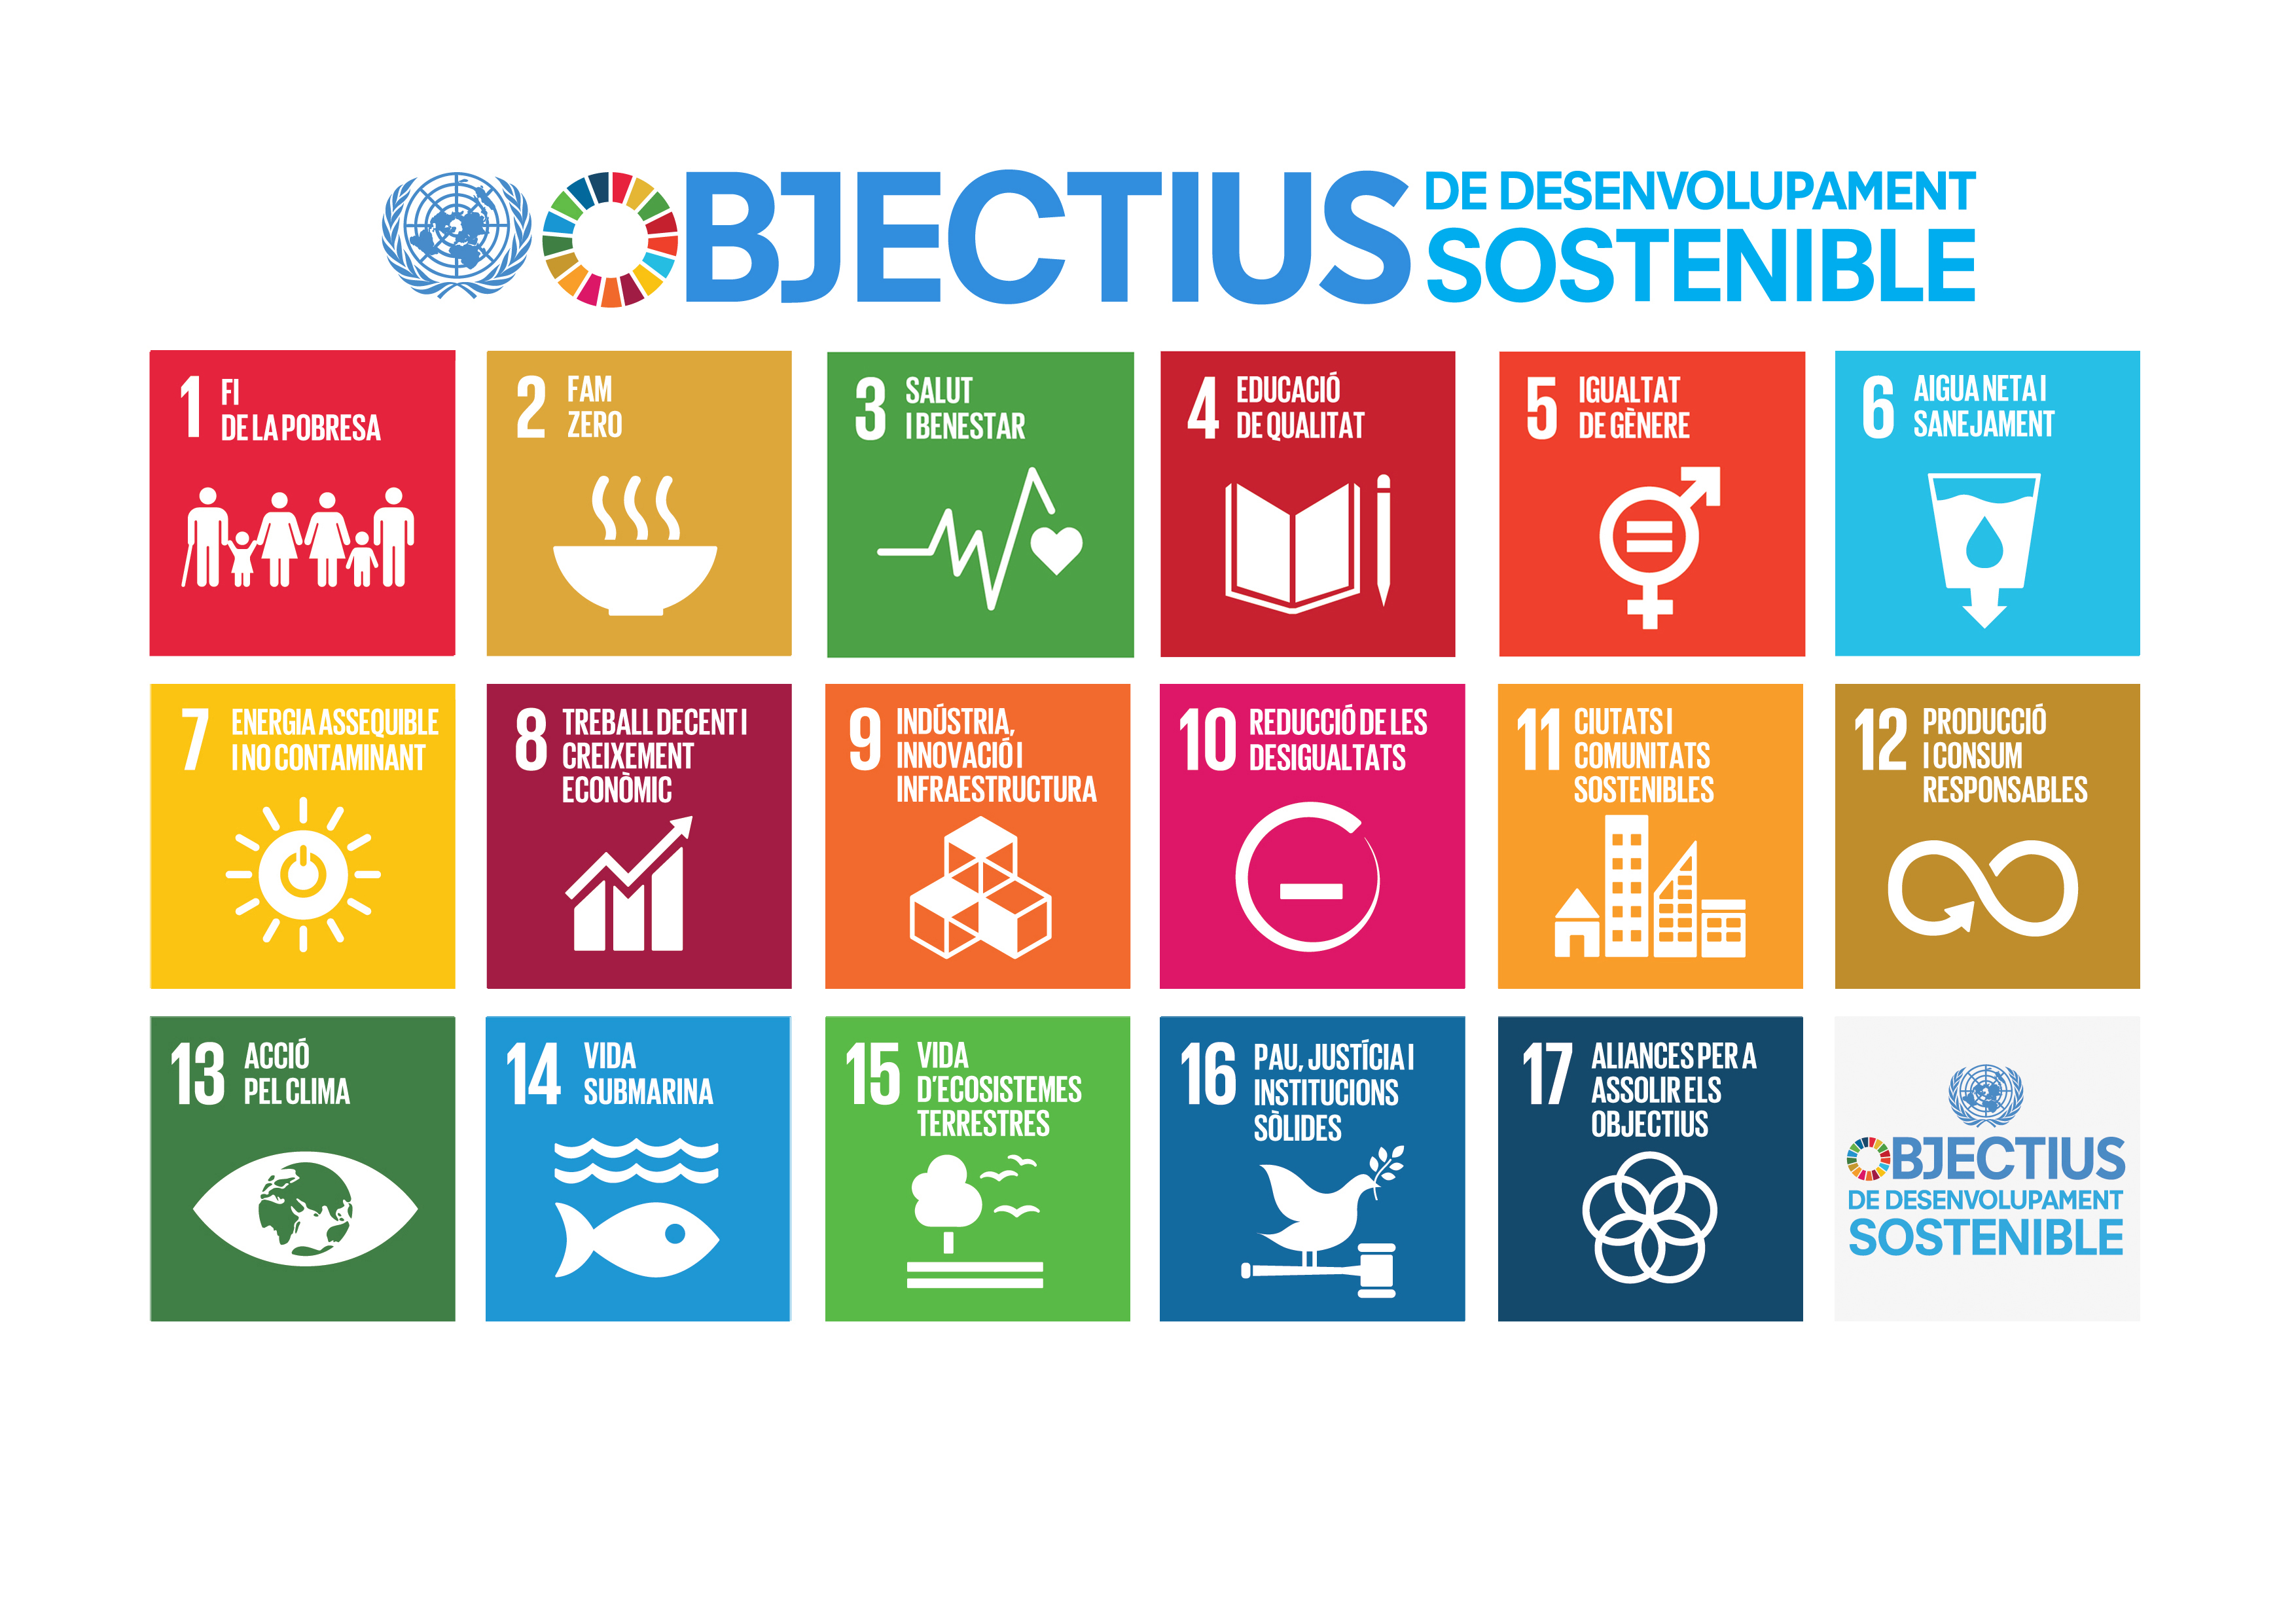 Agenda 2030. Objectius de Desenvolupament Sostenible (ODS)